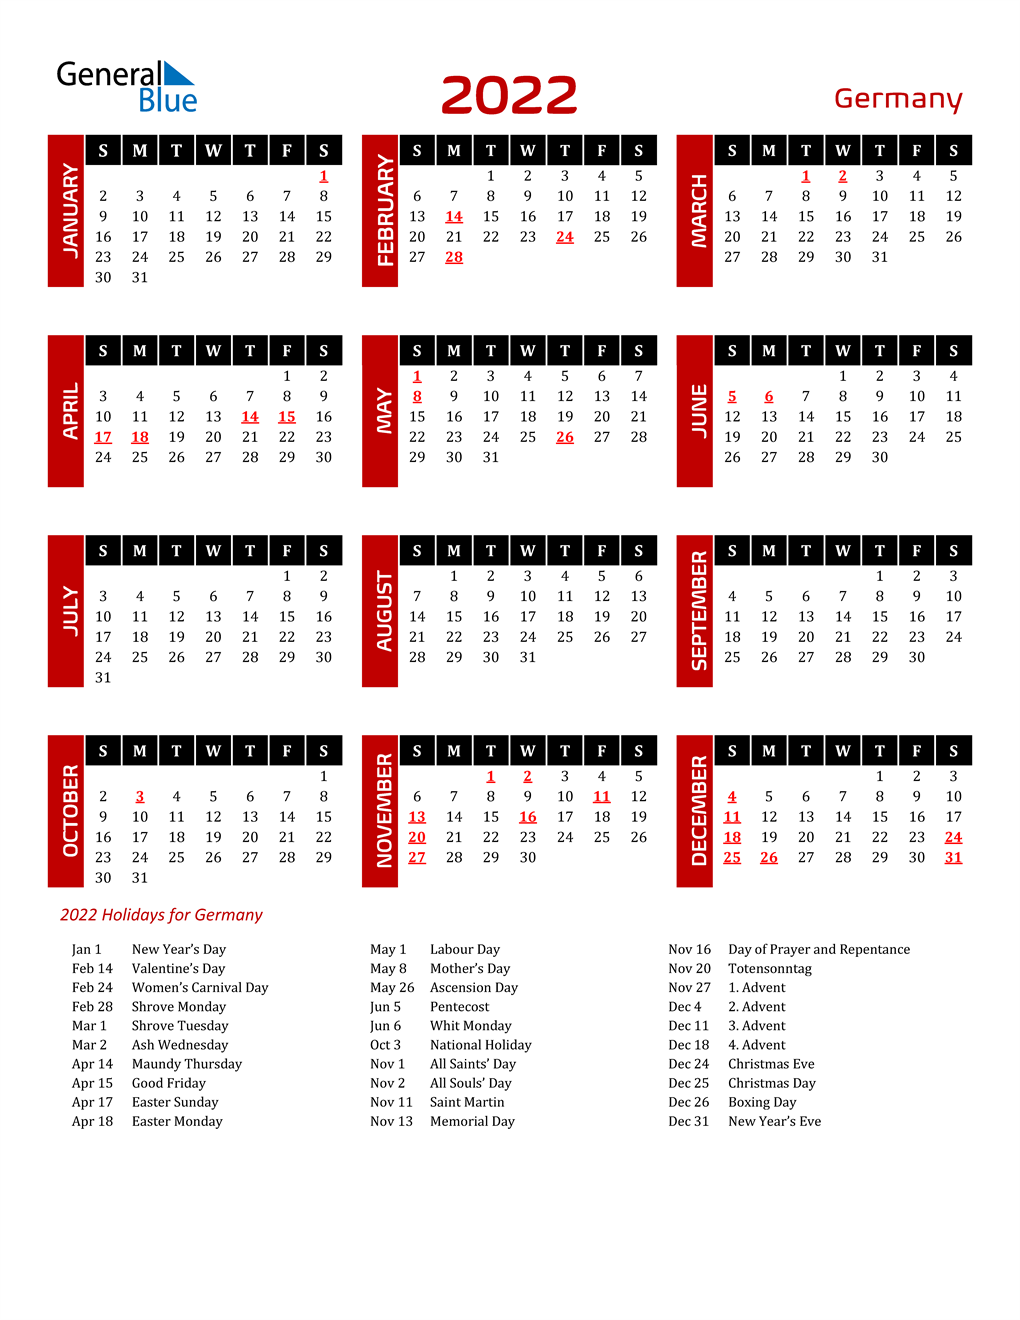 German Calendar 2022 2022 Germany Calendar With Holidays